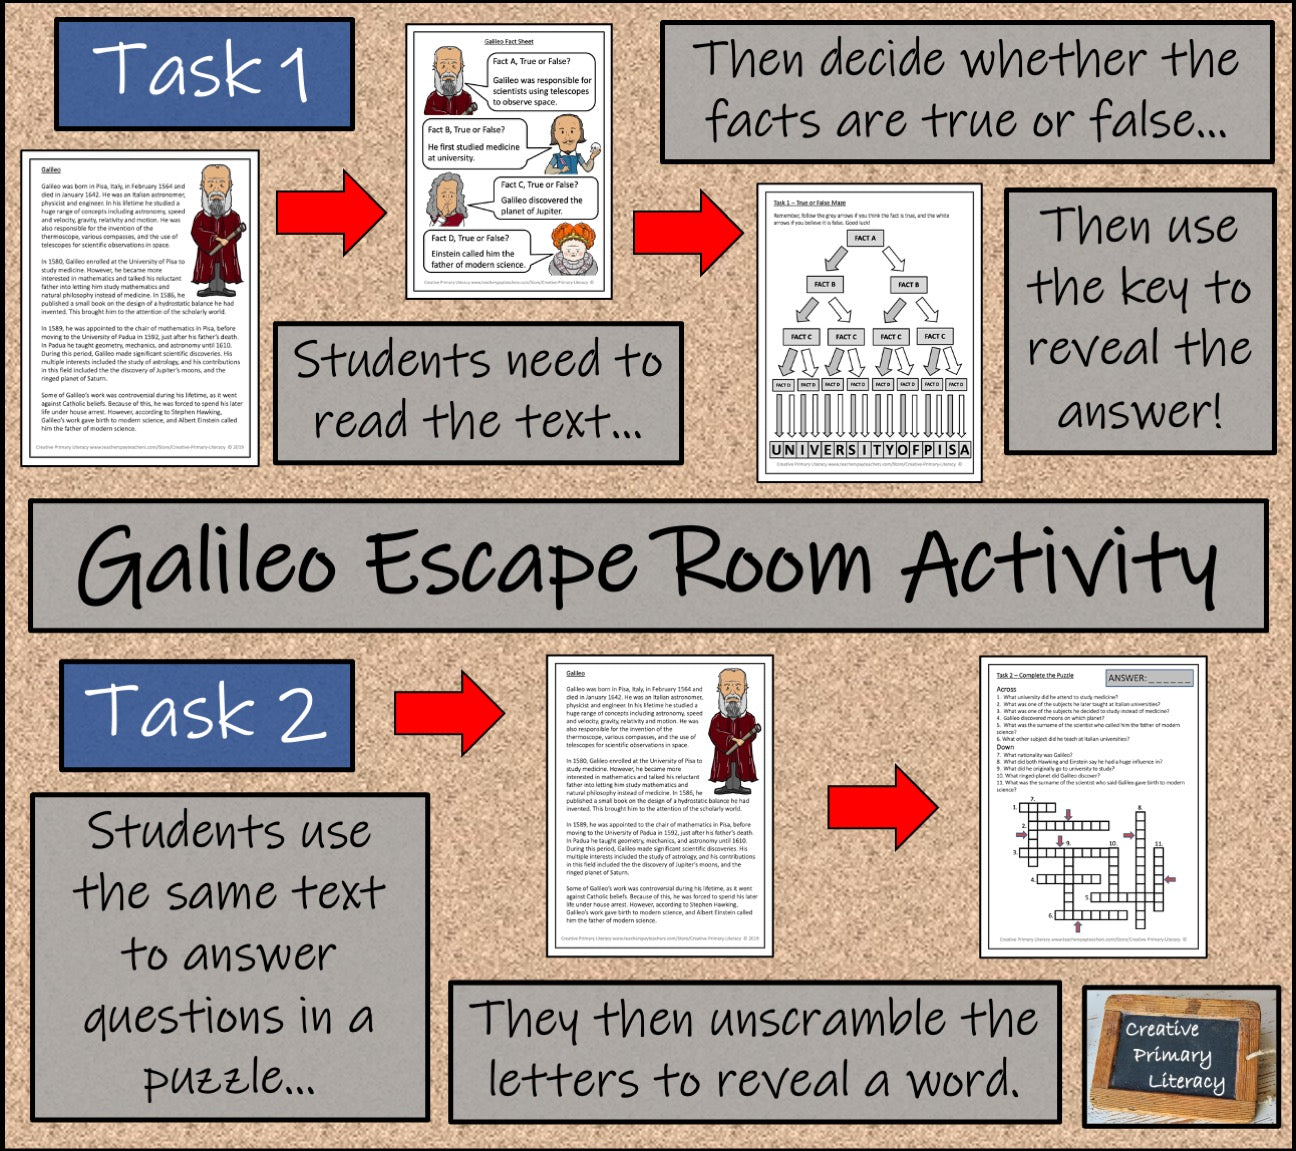 Galileo Escape Room Activity